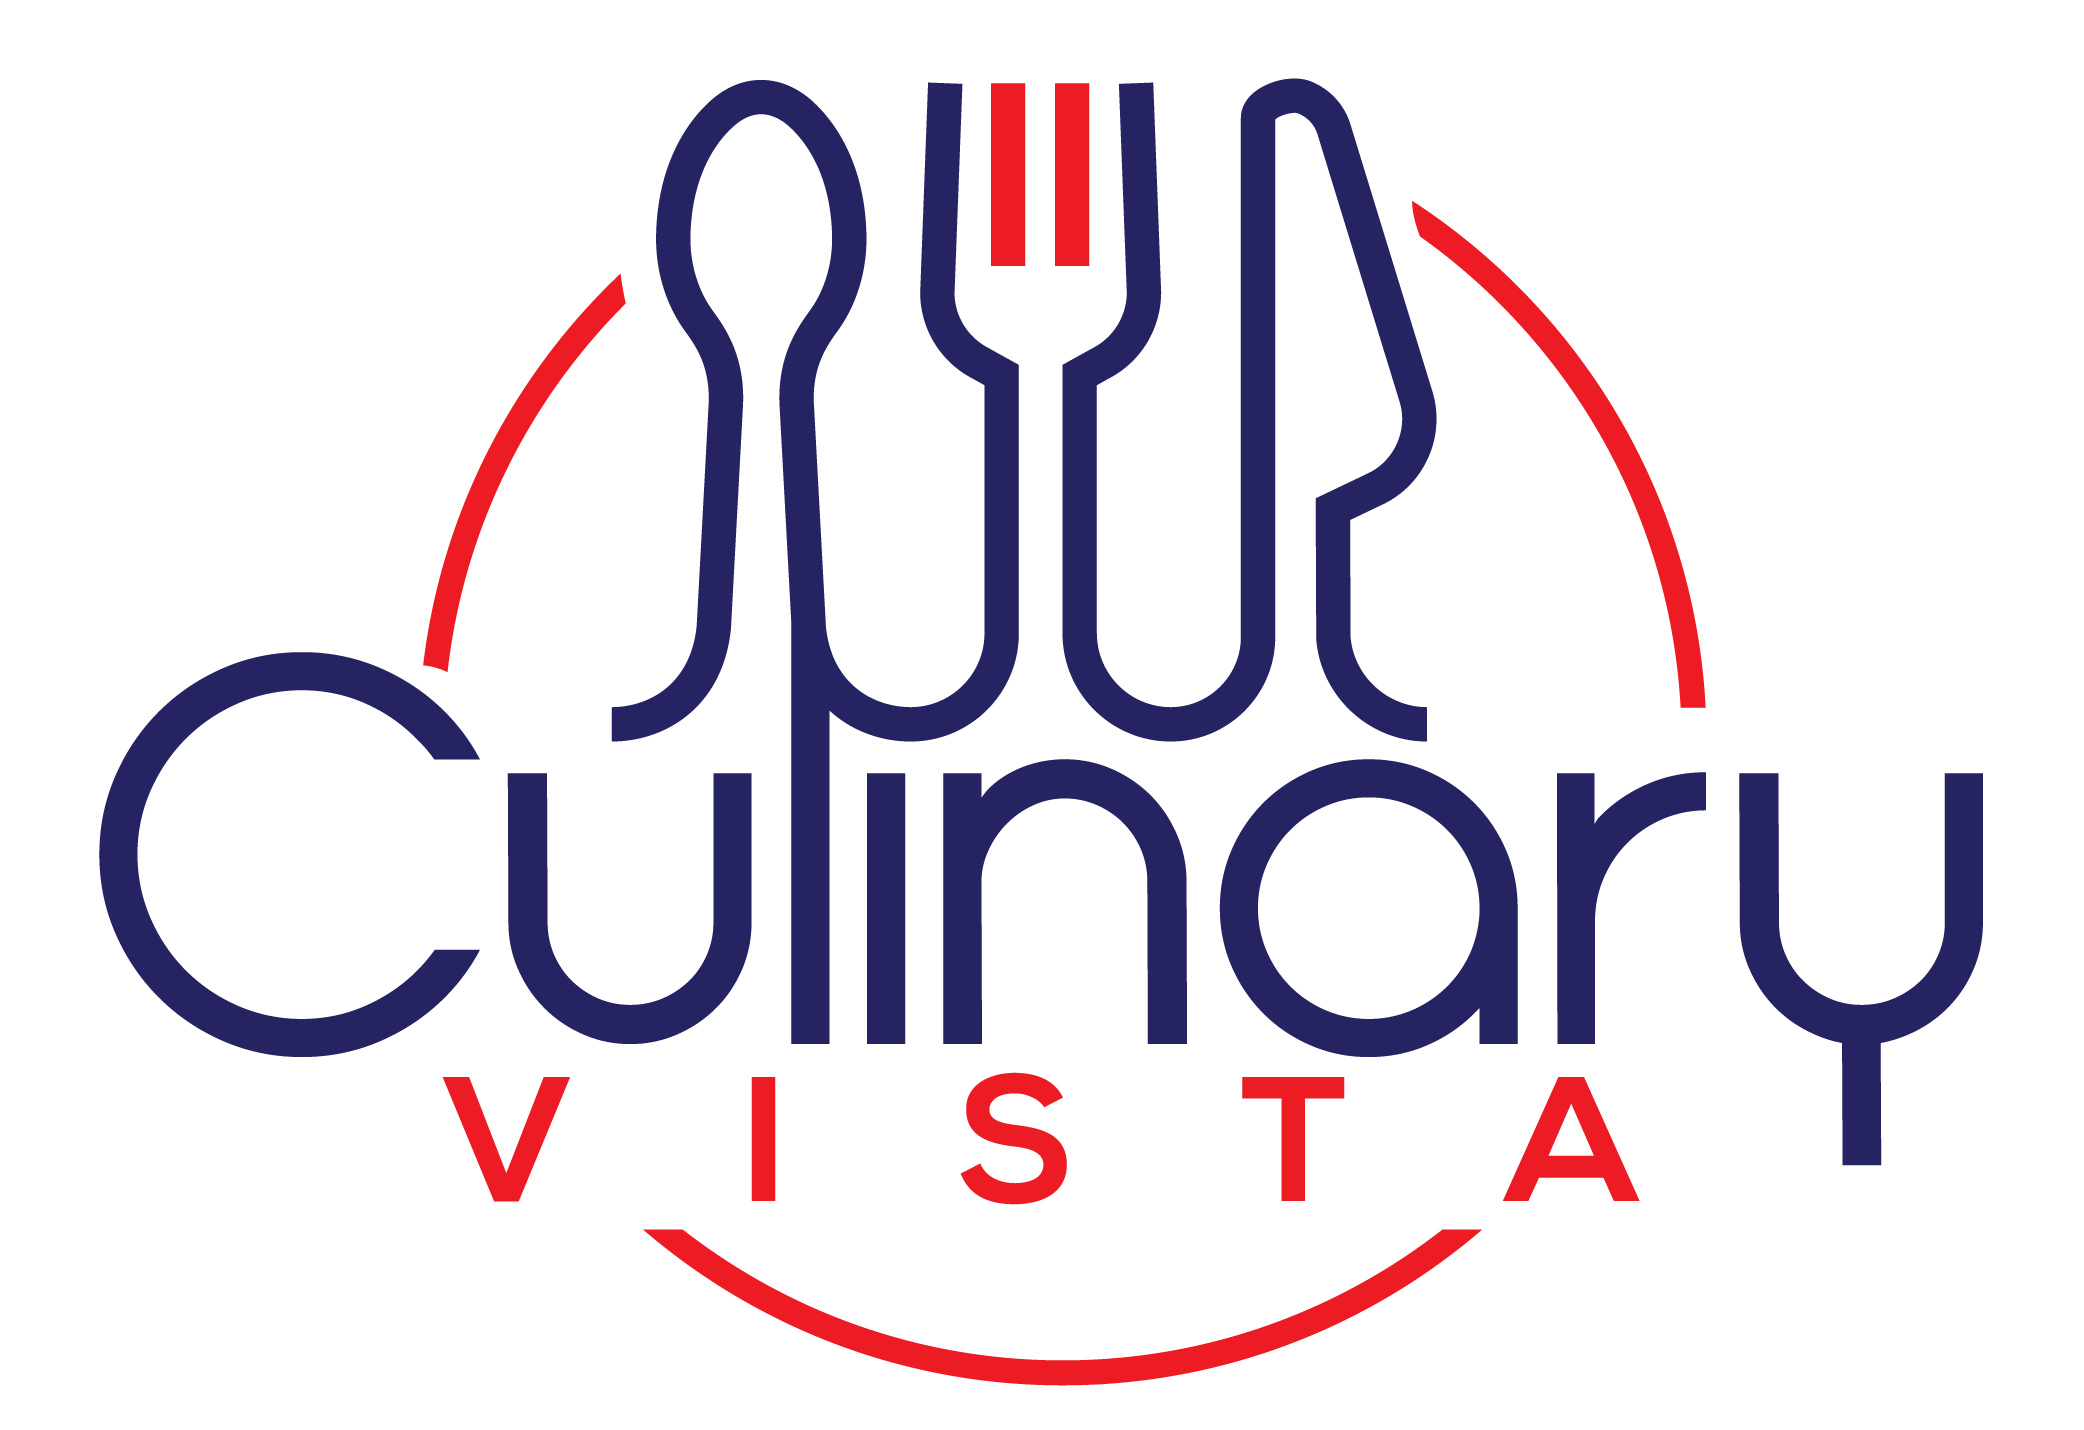 Culinary Vista